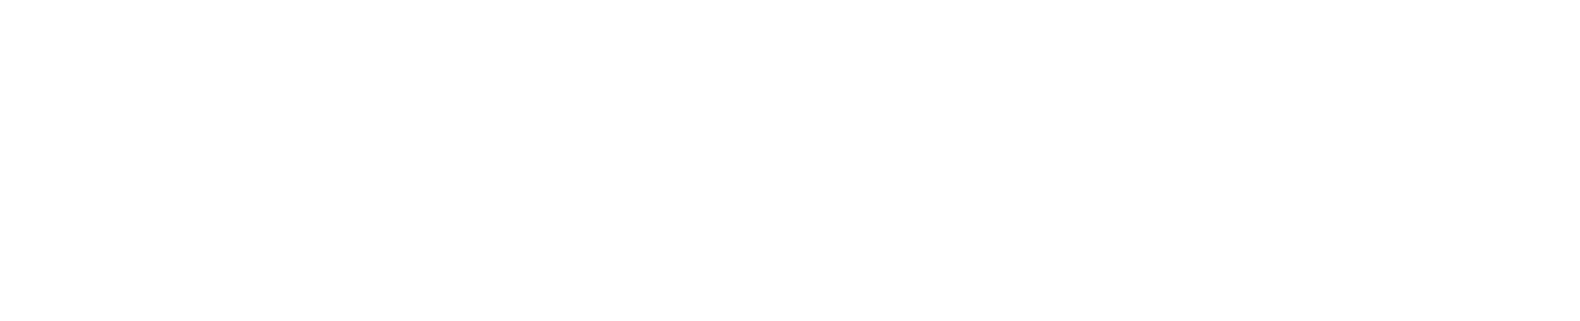 Babcock International Group Logo groß für dunkle Hintergründe (transparentes PNG)